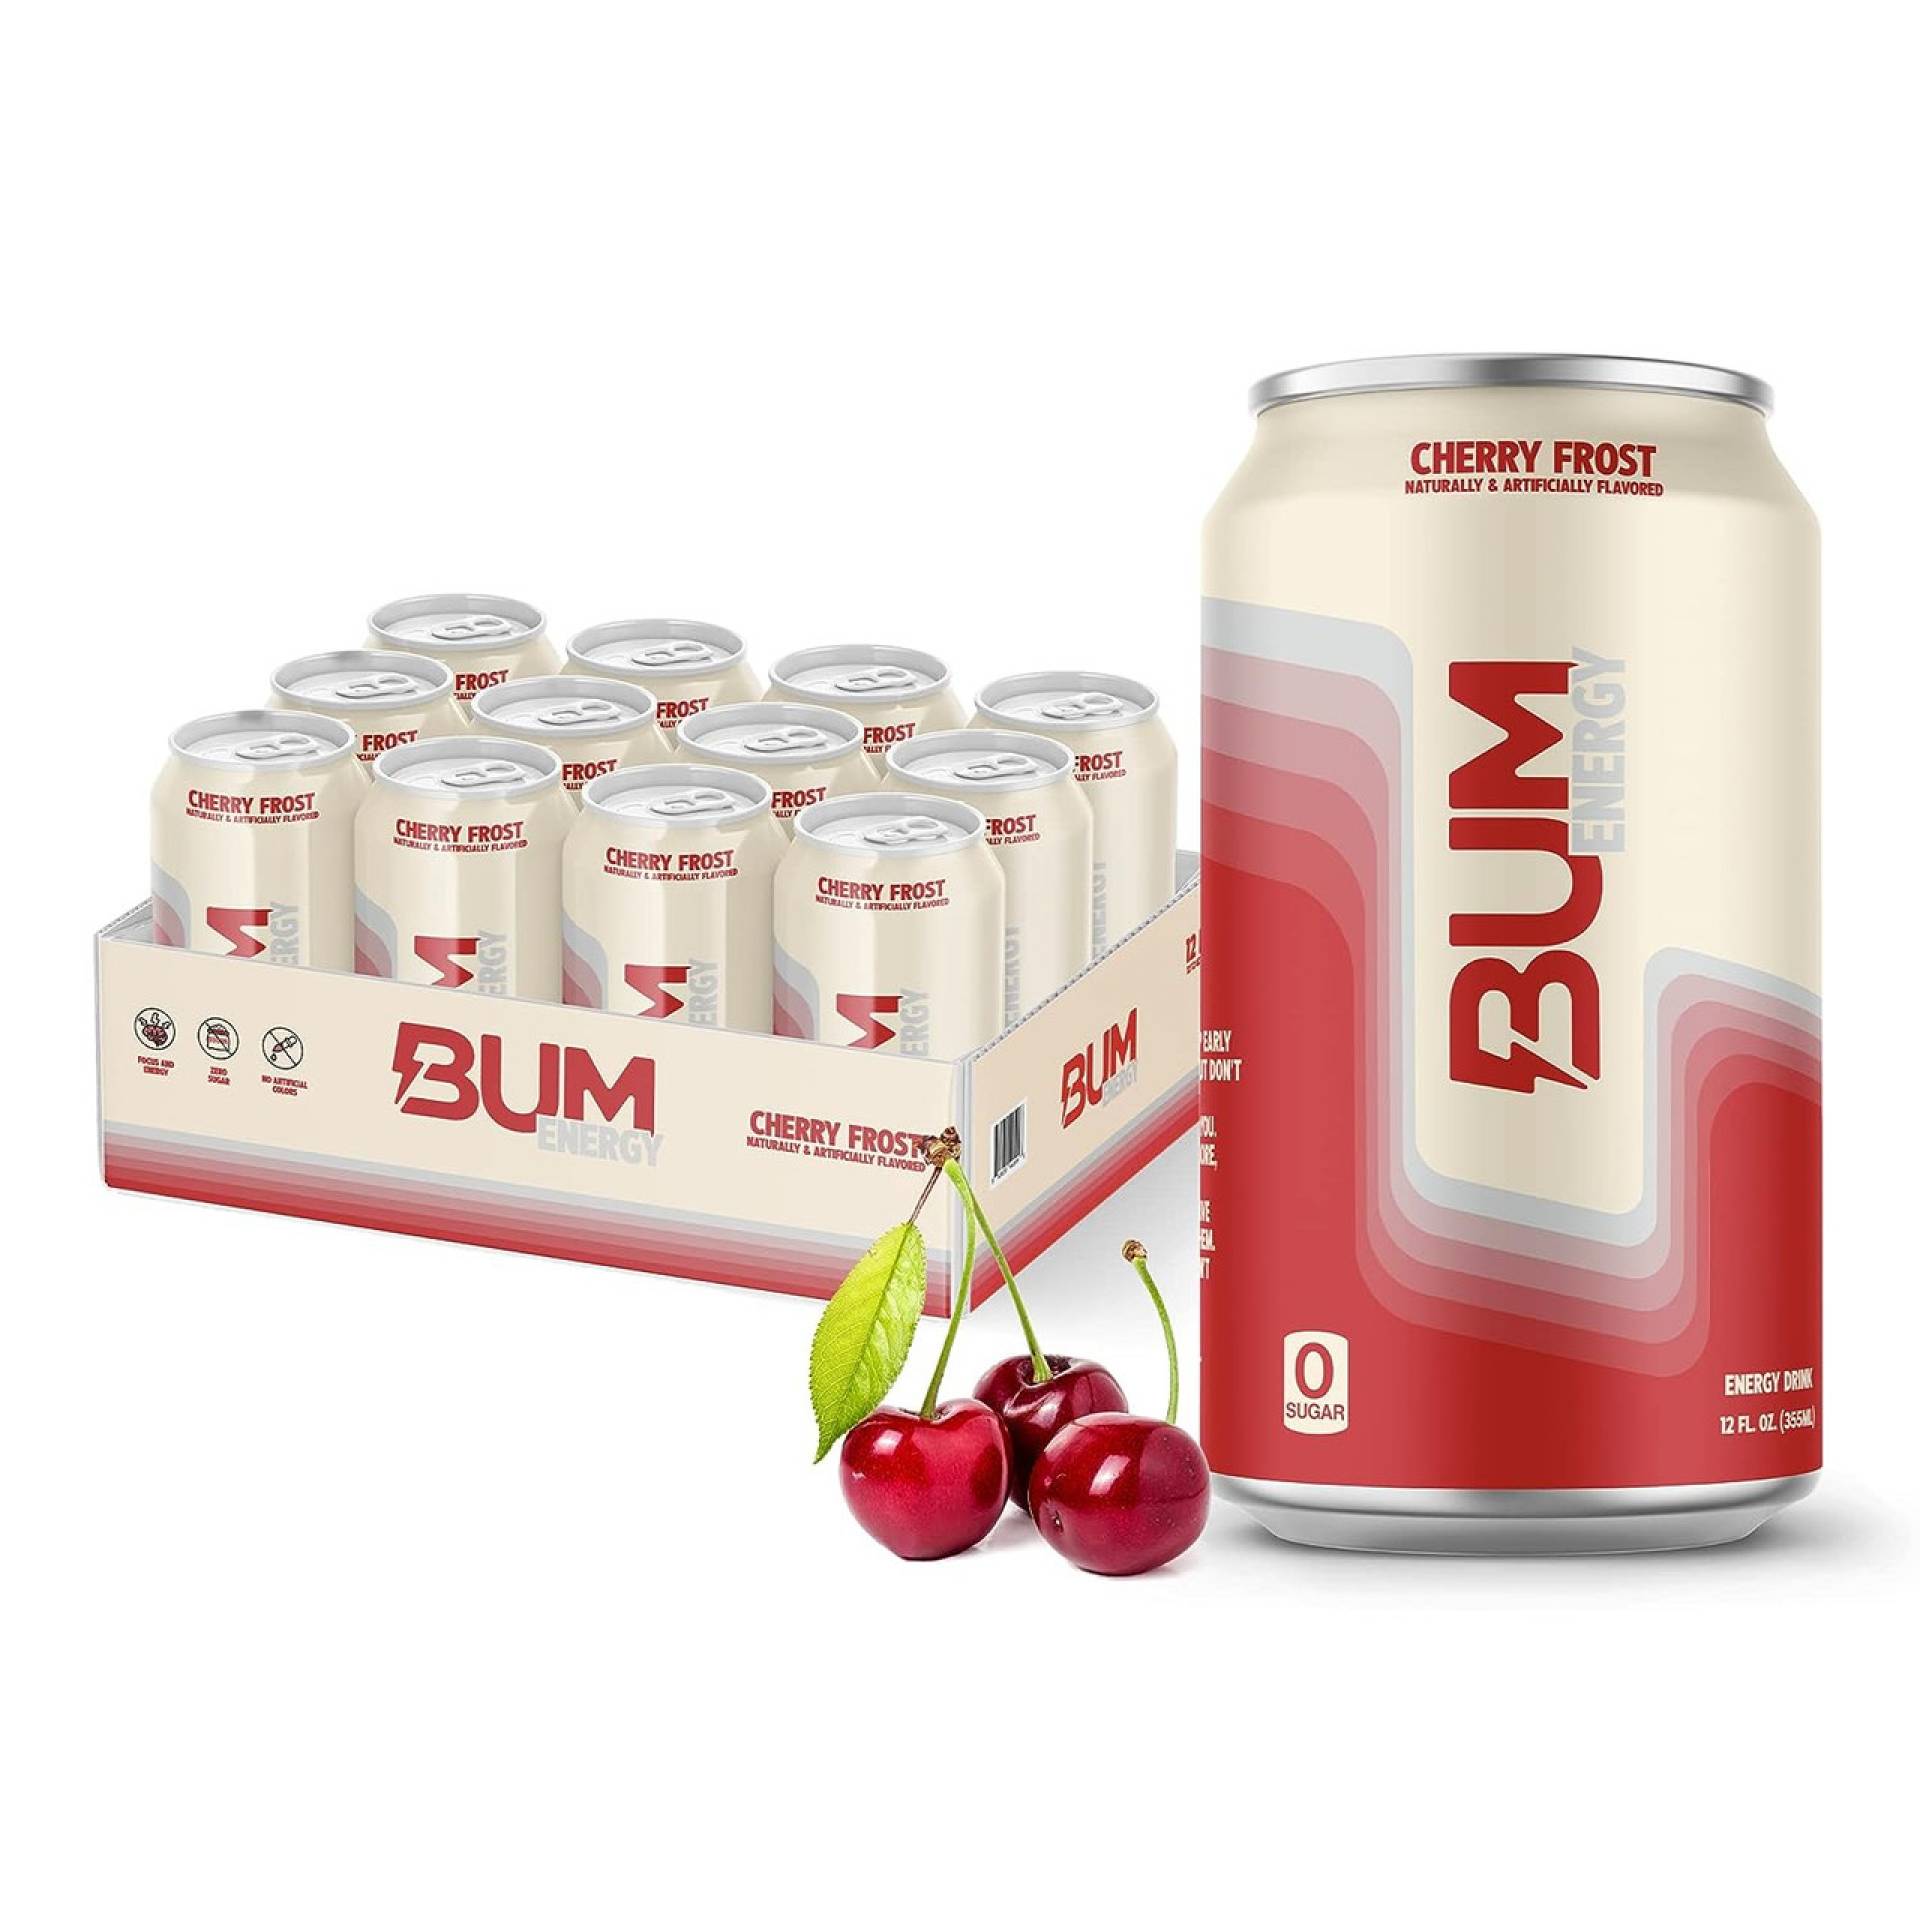 CBUM Energy Drinks - $3.99